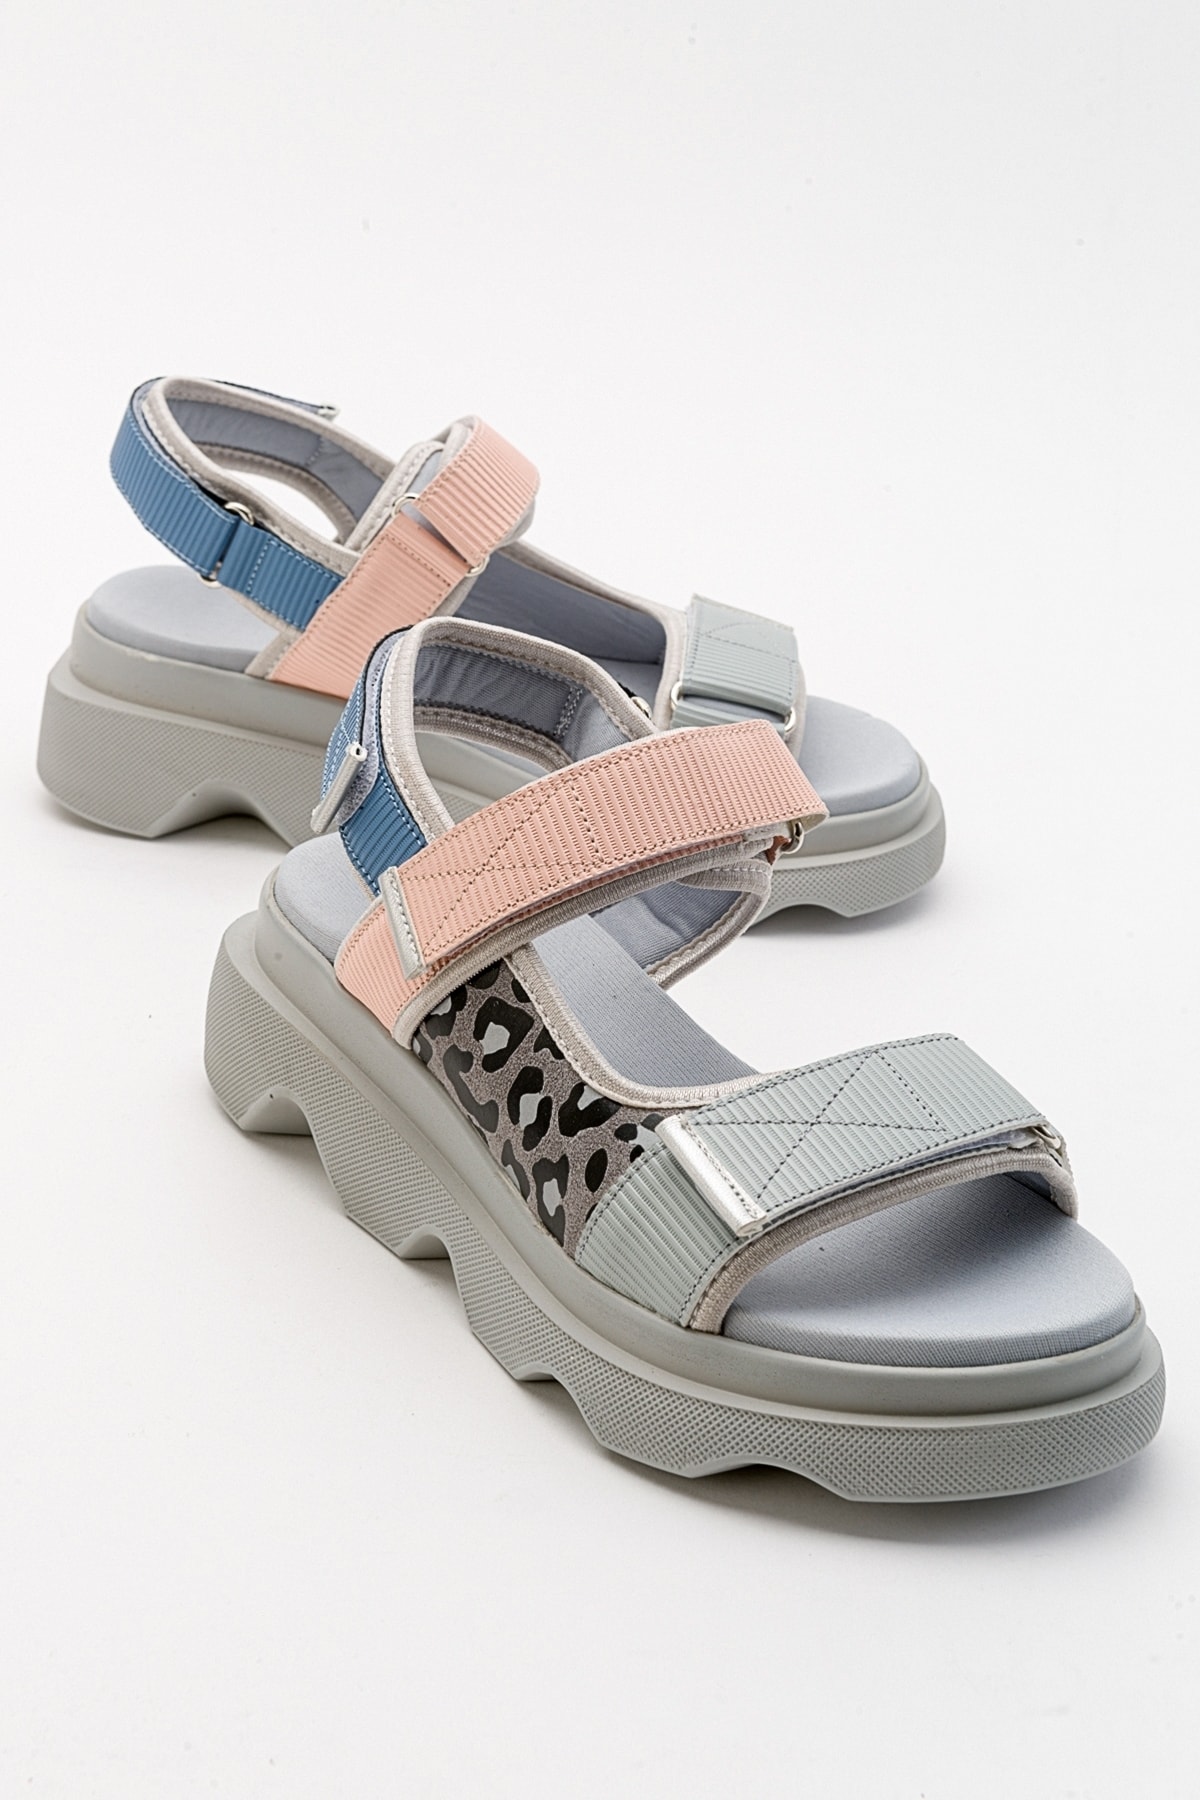 Levně LuviShoes Women's Tedy Blue Patterned Sandals